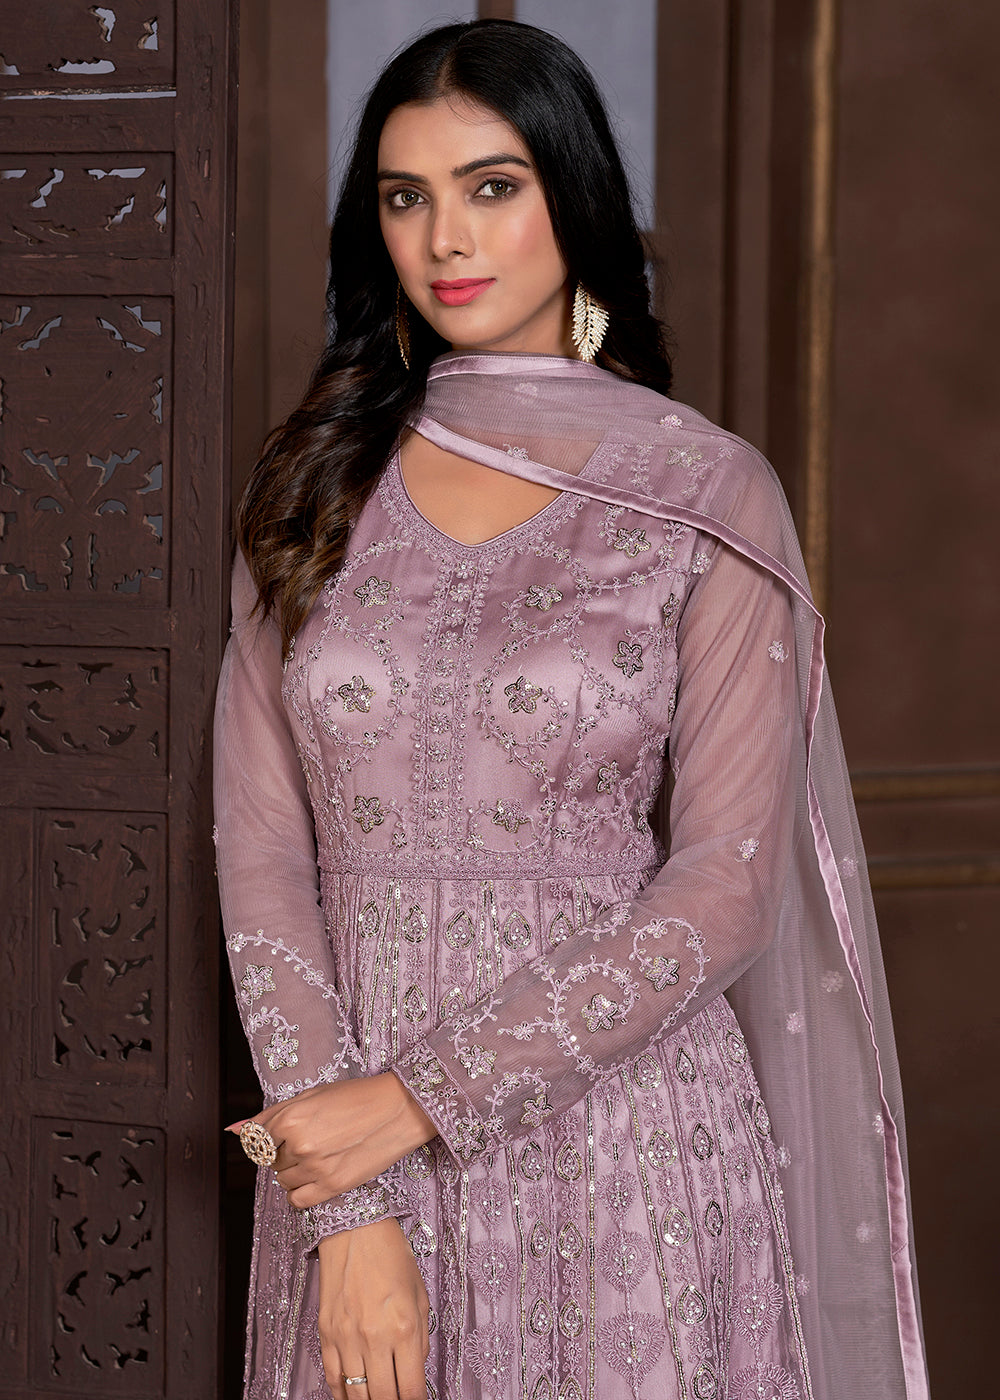 Buy Now Elegant Pink Butterfly Net Designer Anarkali Suit Online in USA, UK, Australia, New Zealand, Canada & Worldwide at Empress Clothing.